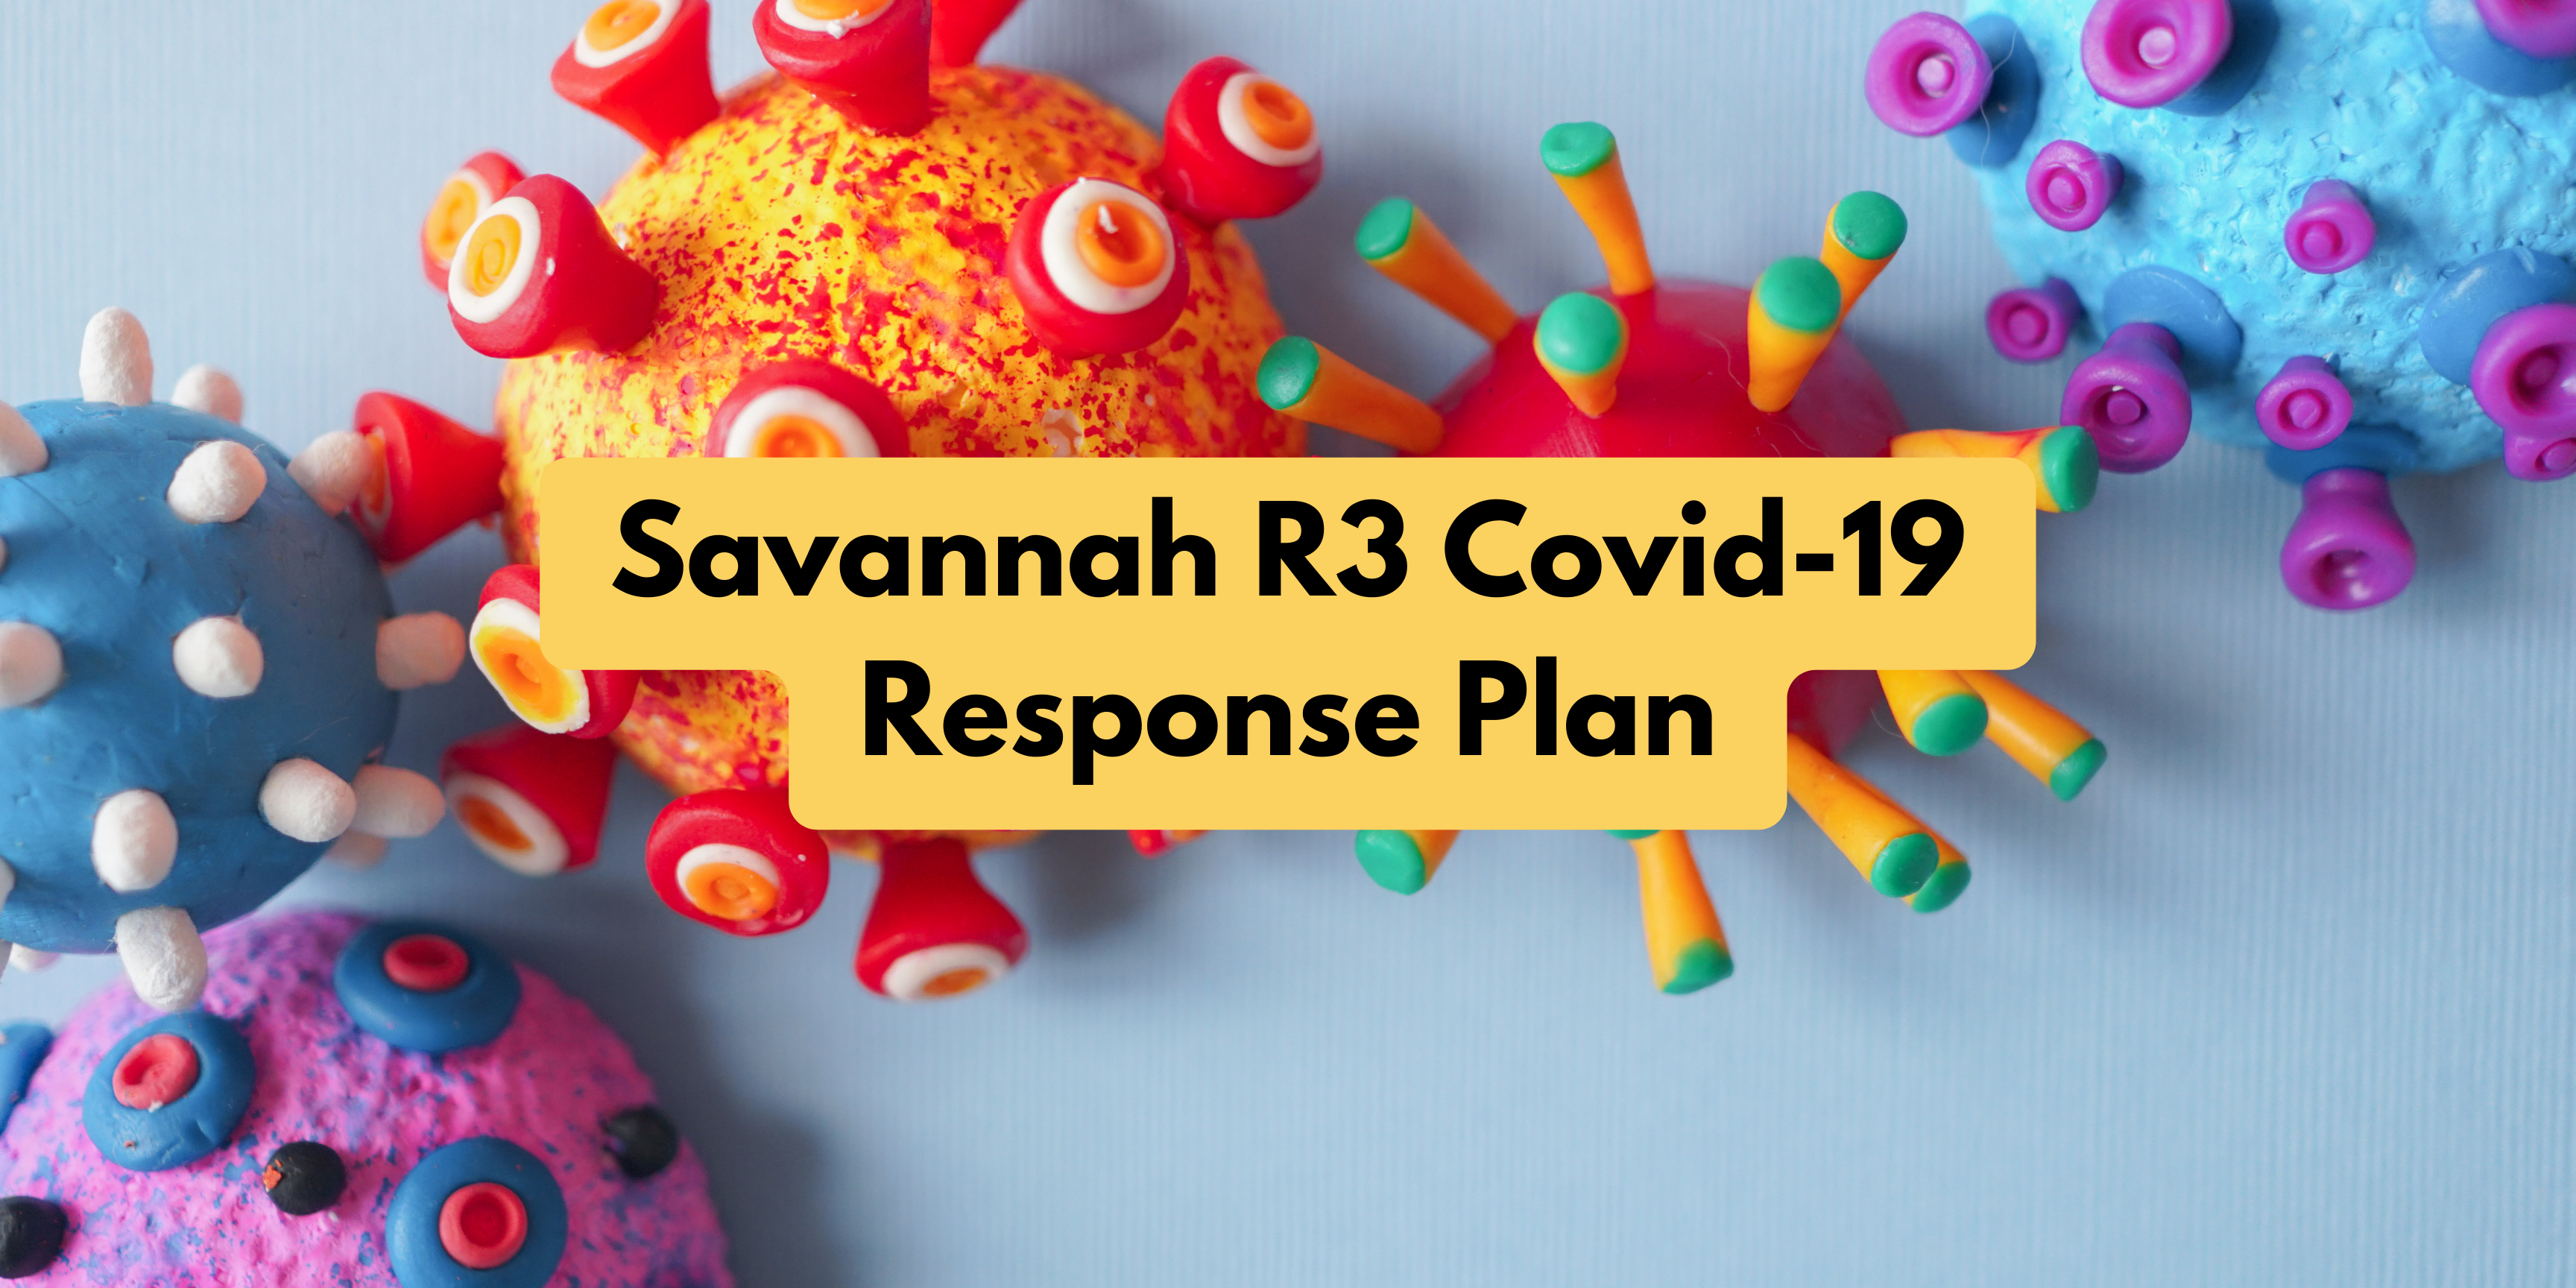 Savannah R3 Covid-19 Response Plan